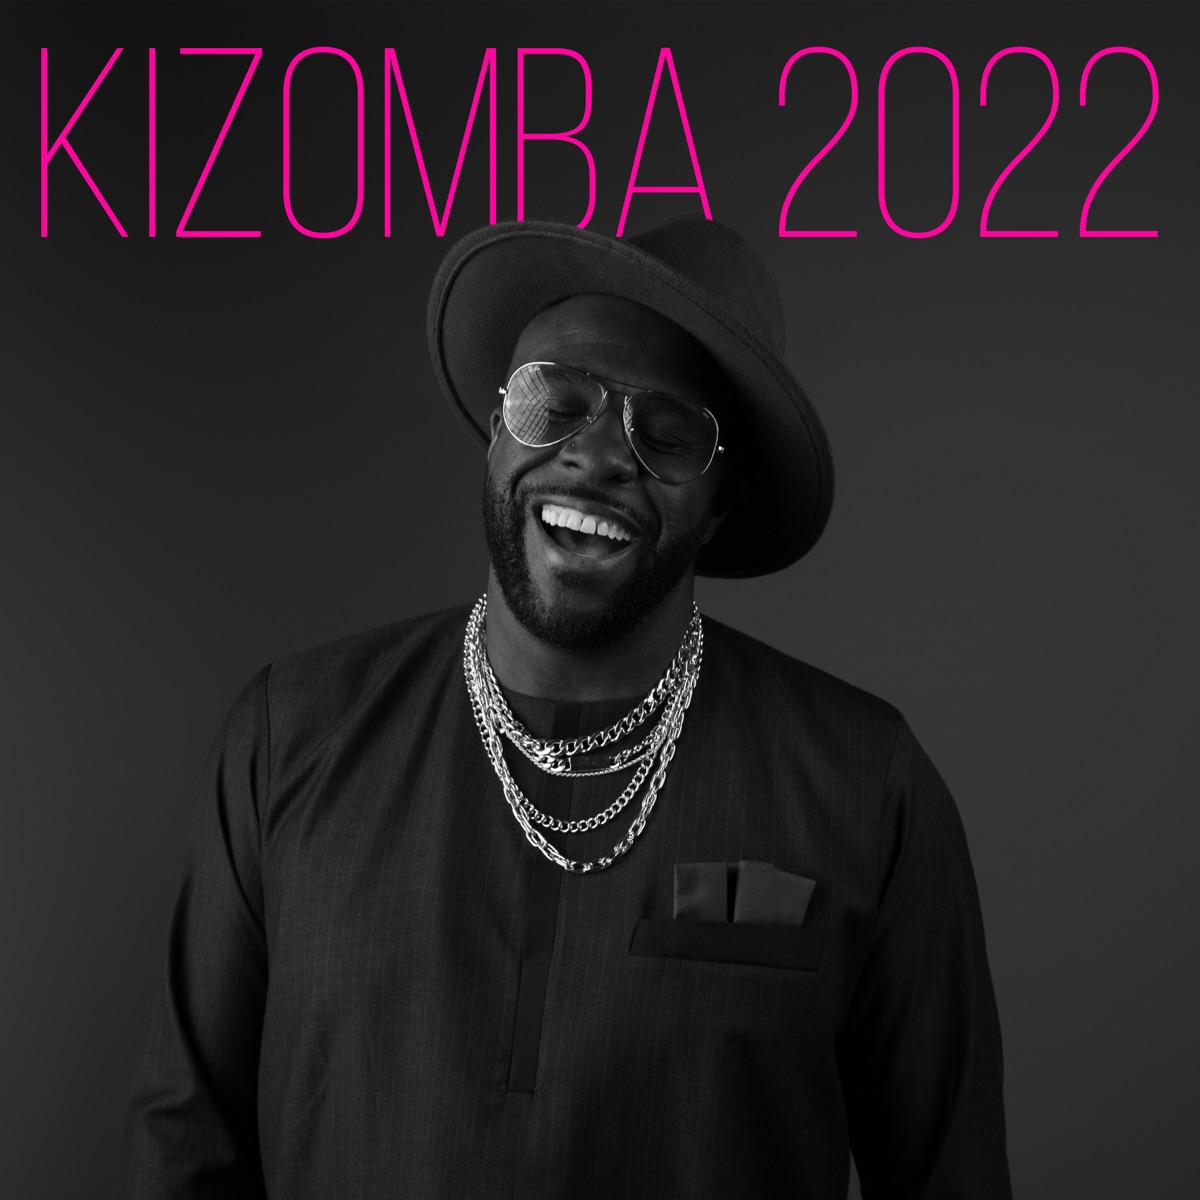 Kizomba 2022 by Kaysha on Apple Music